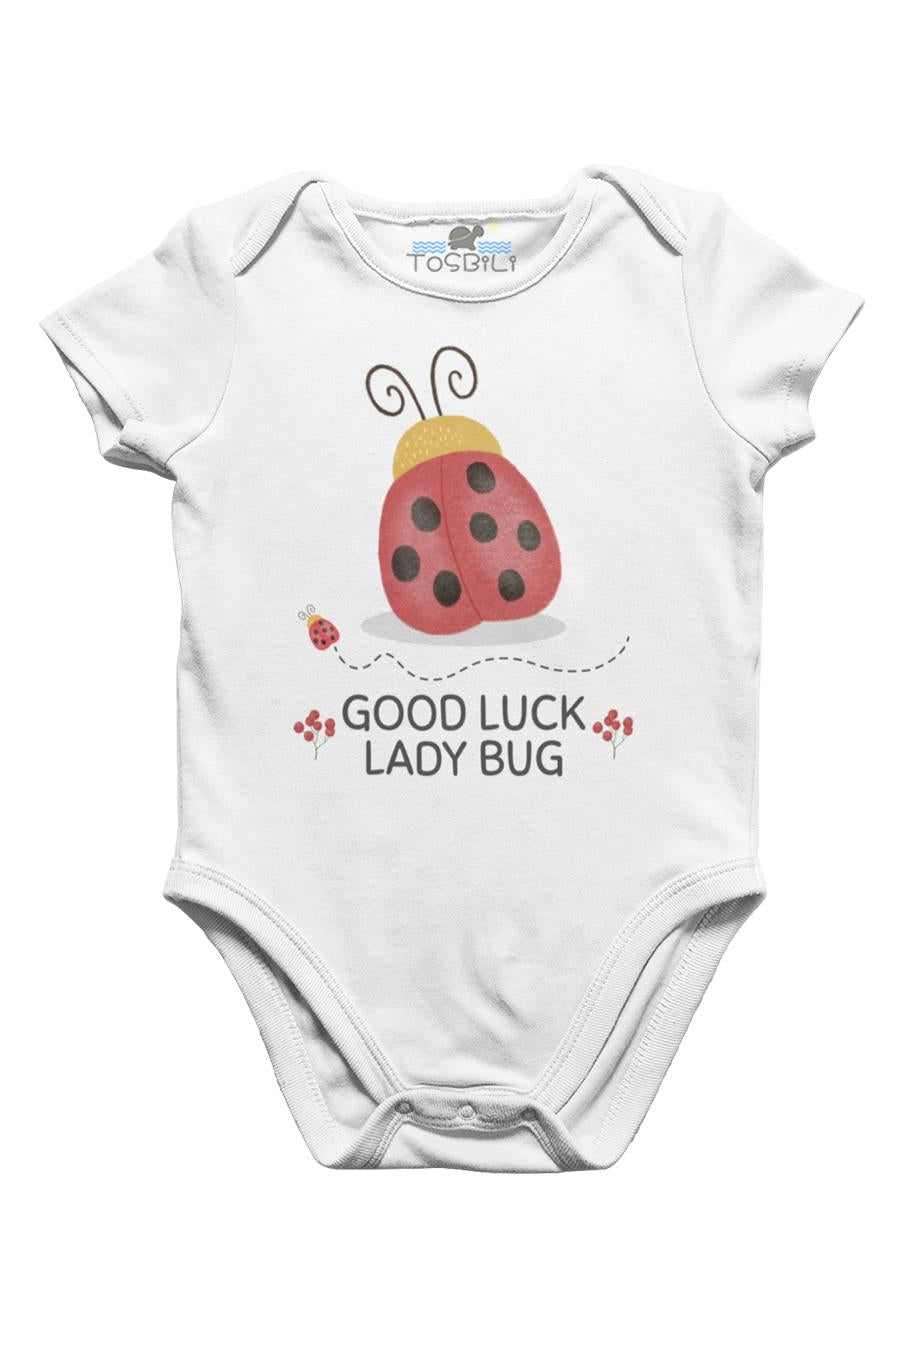 Tosbili Lady Bug White Baby Body